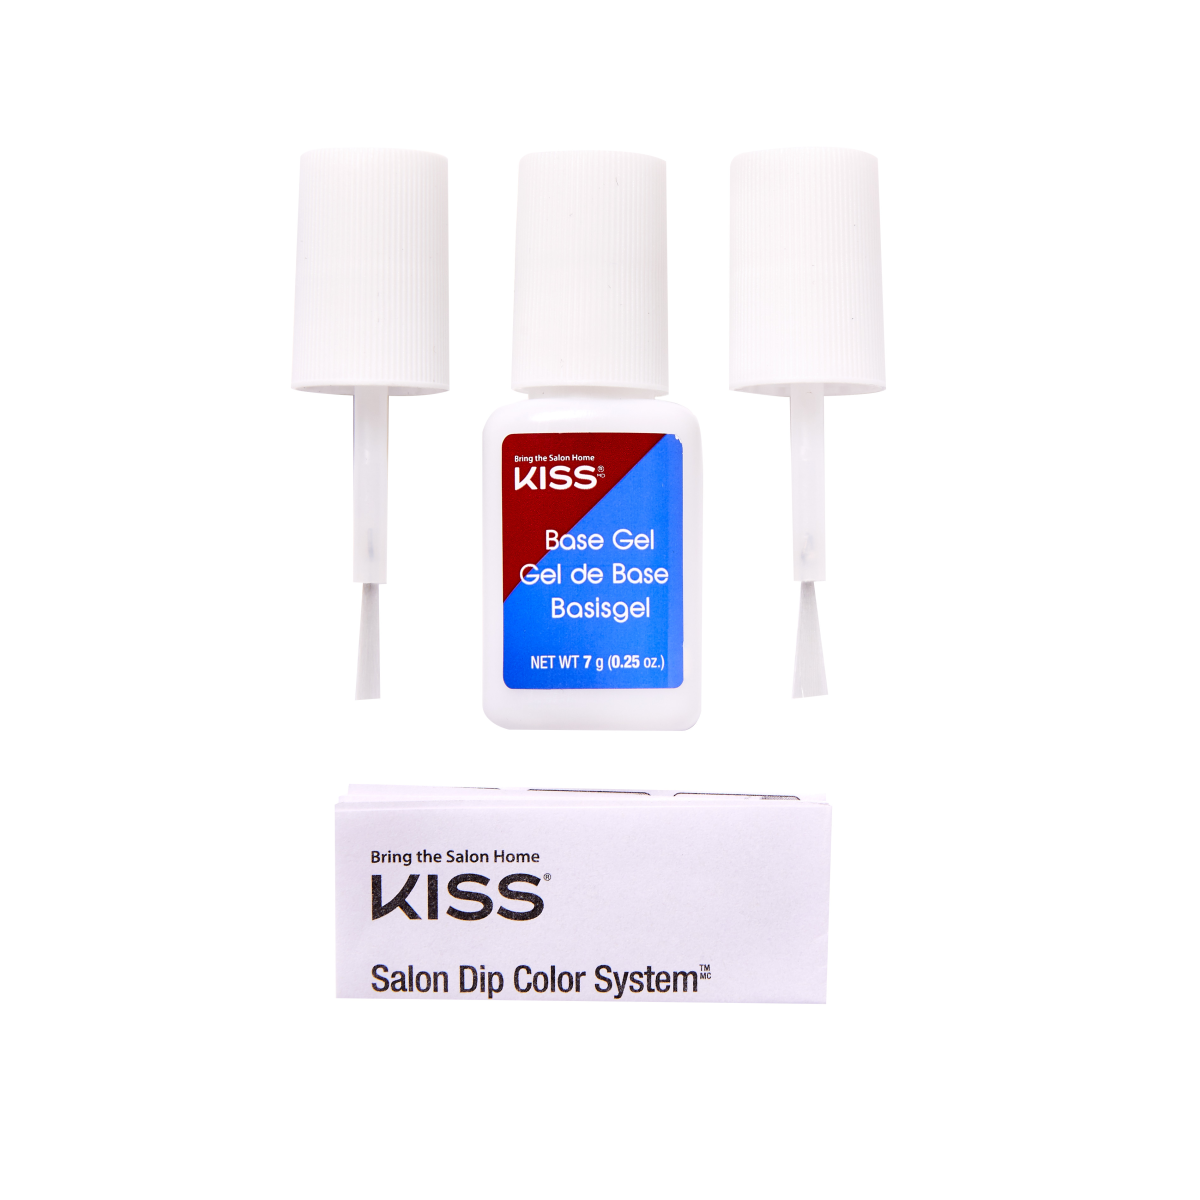 KISS Salon Dip Base Gel